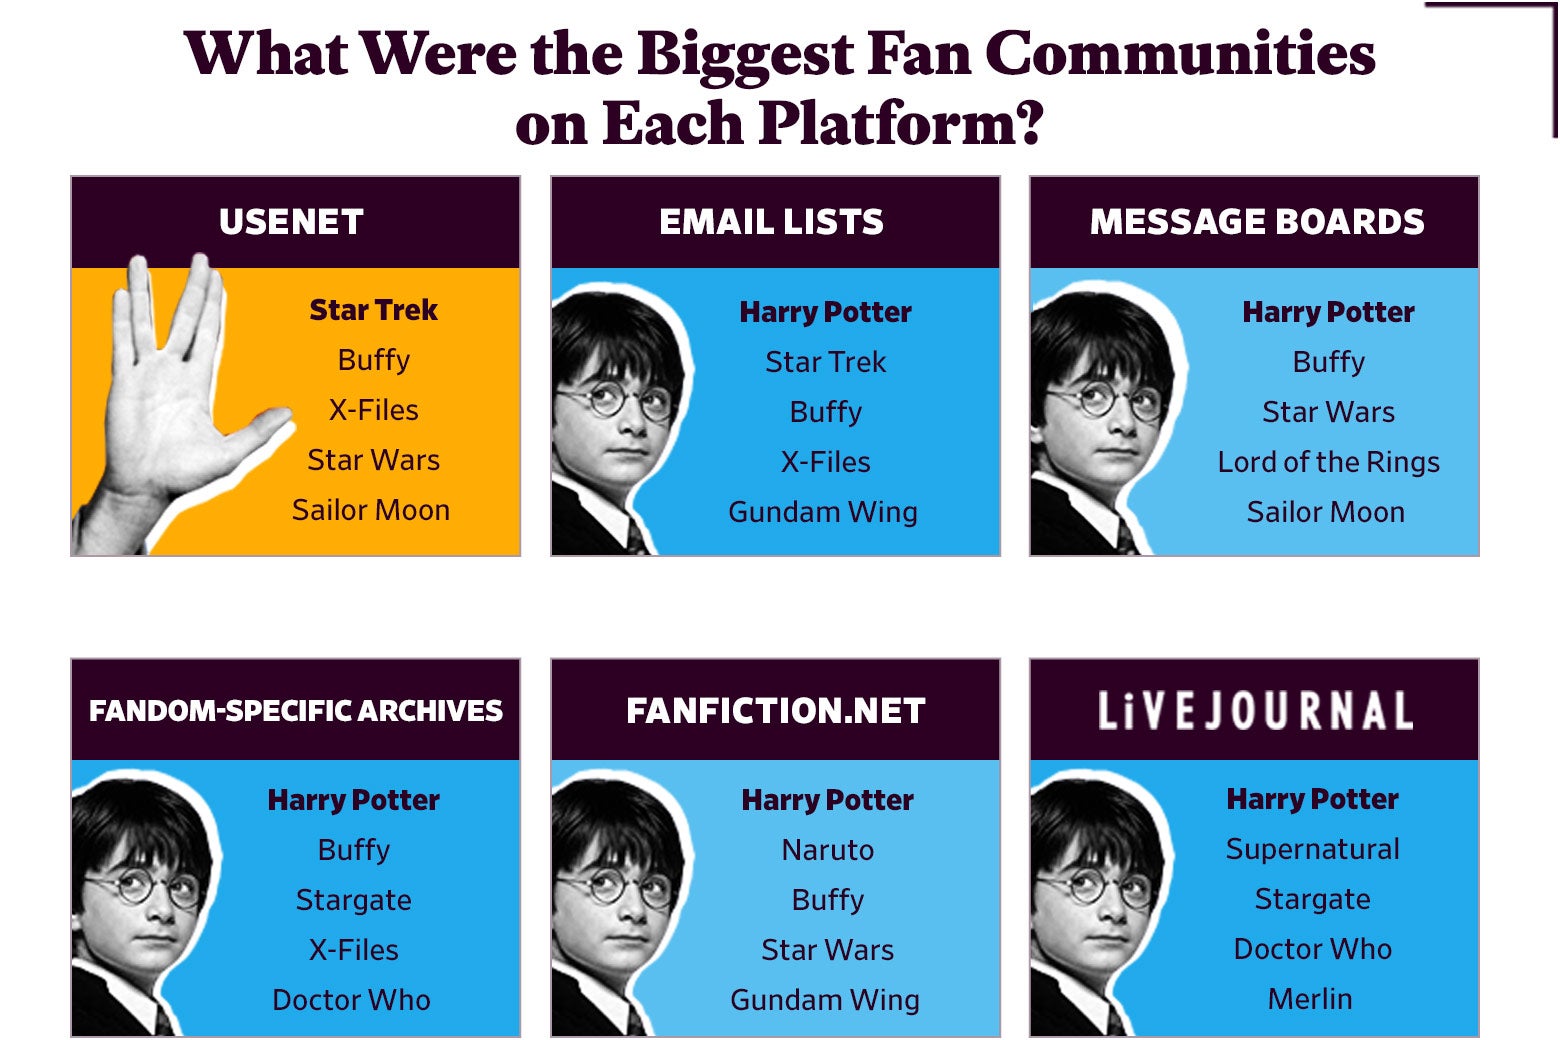 What Were the Biggest Fan Communities on Each Platform?